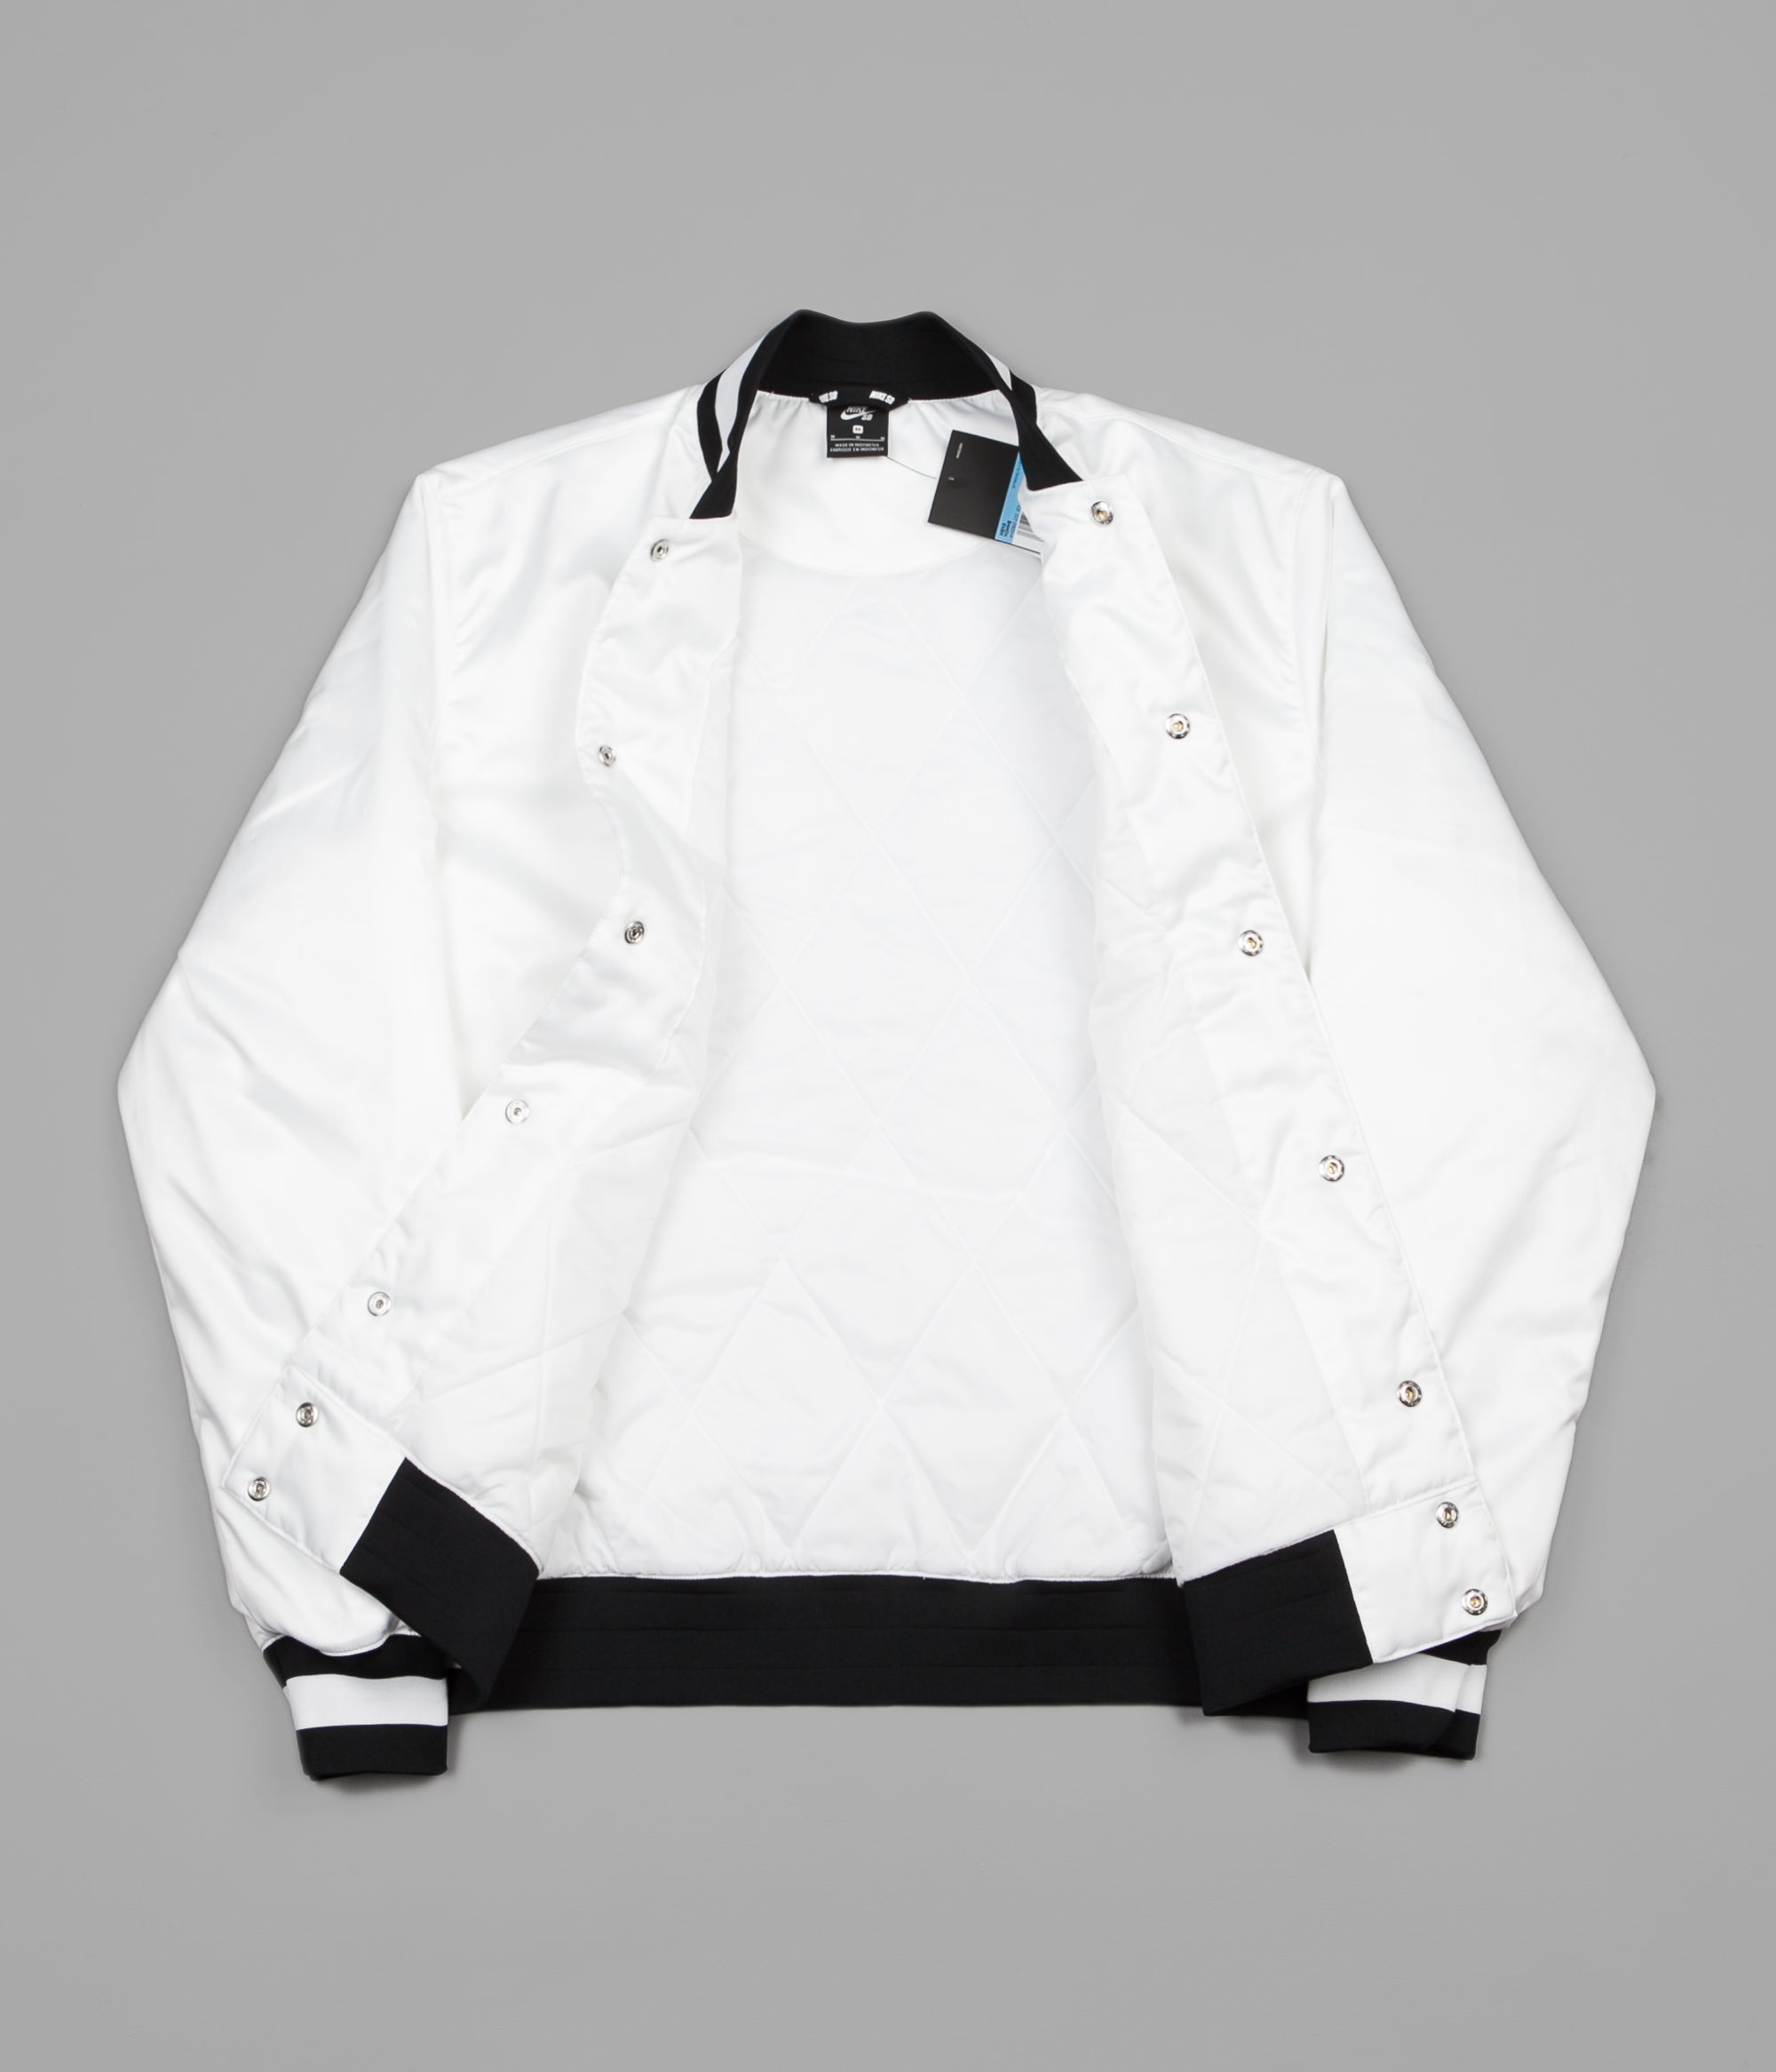 nba bomber jacket white